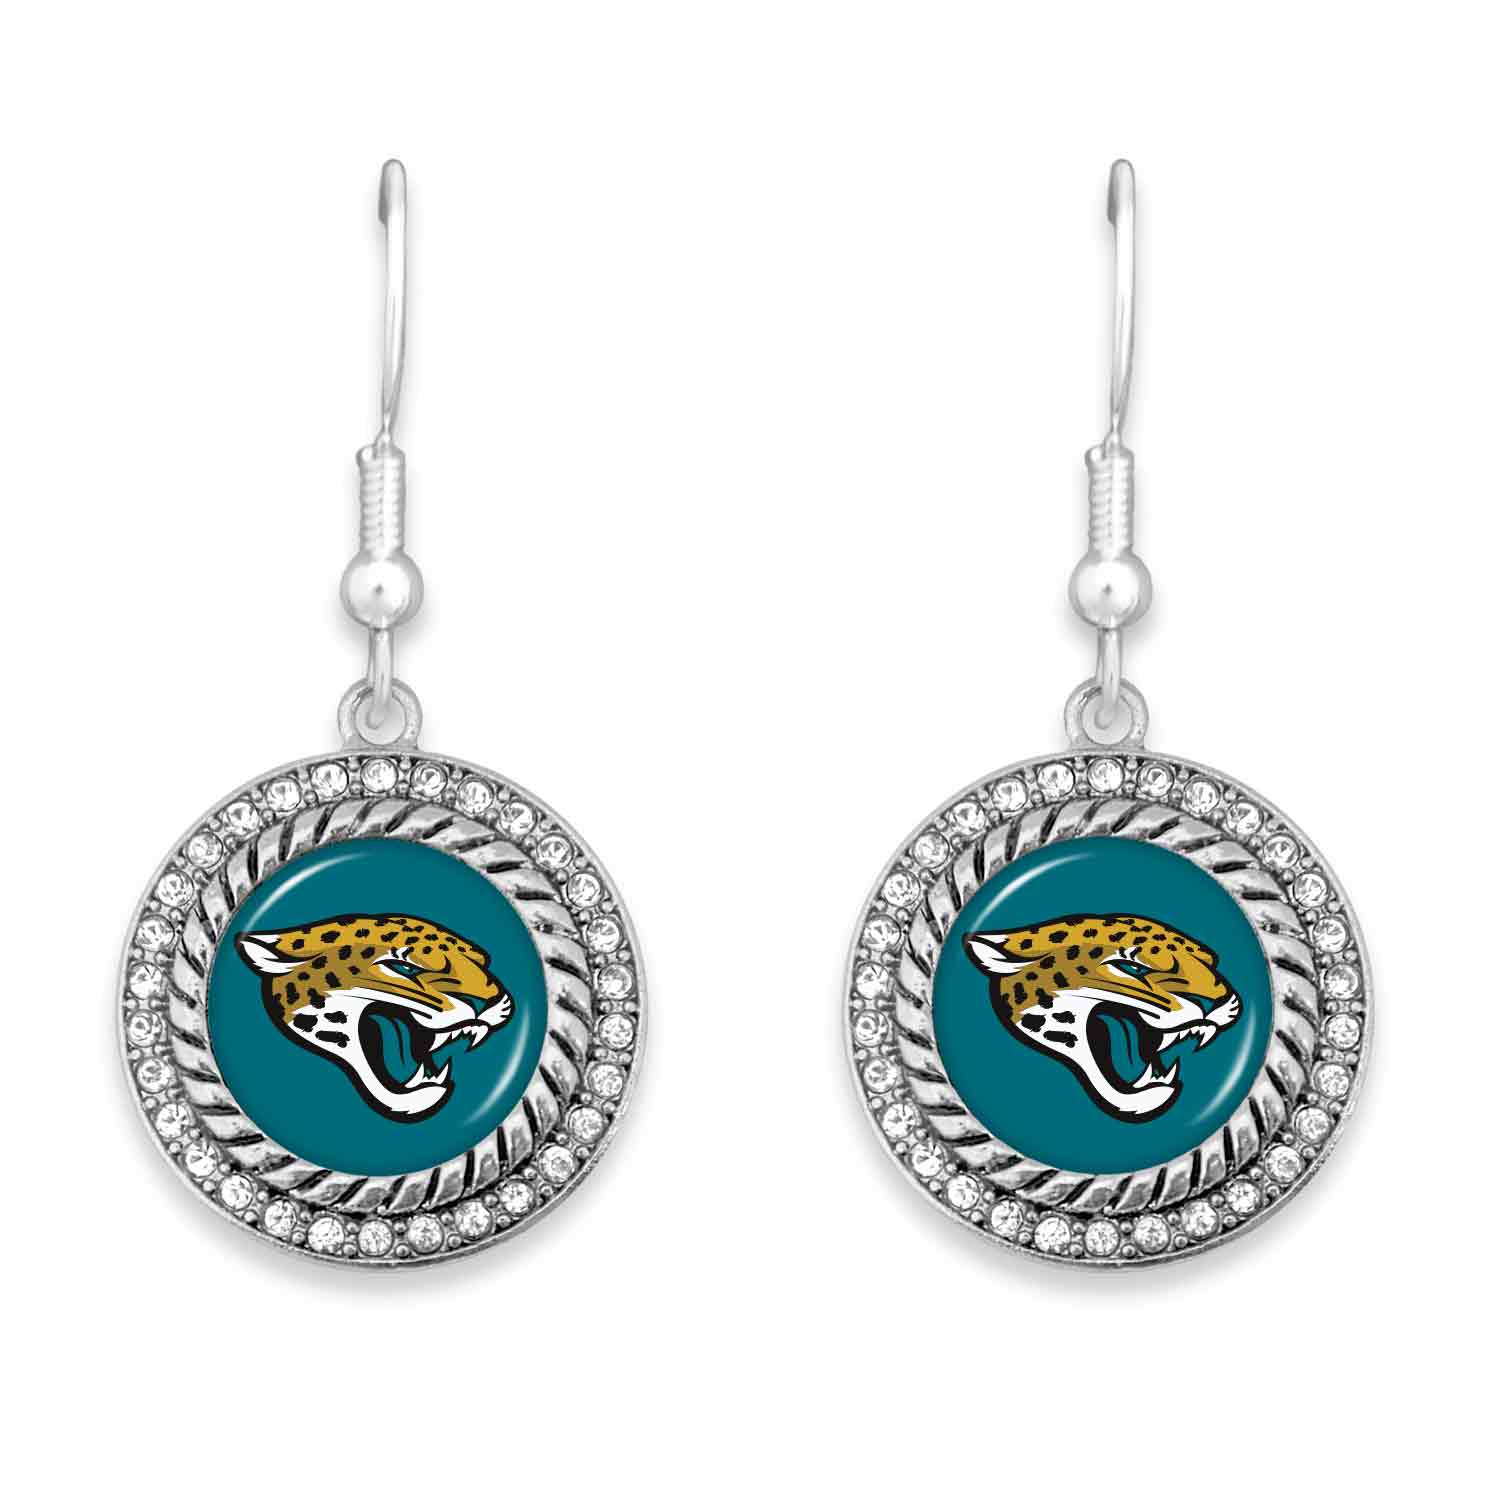 jacksonville jaguars earrings